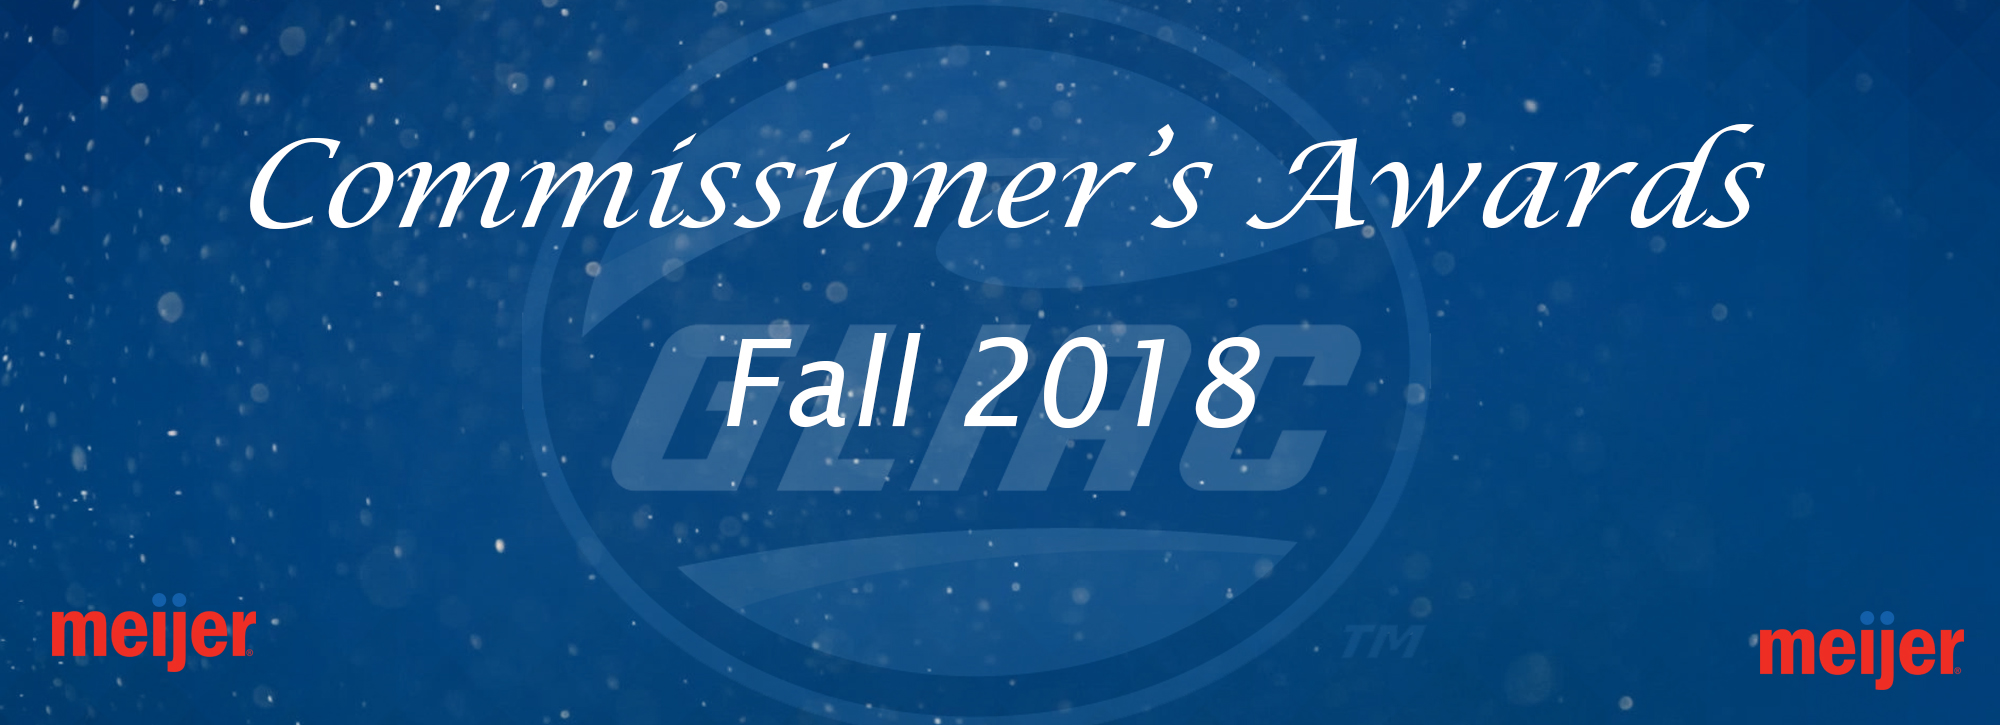 GLIAC announces Fall 2018 Commissioner's Awards